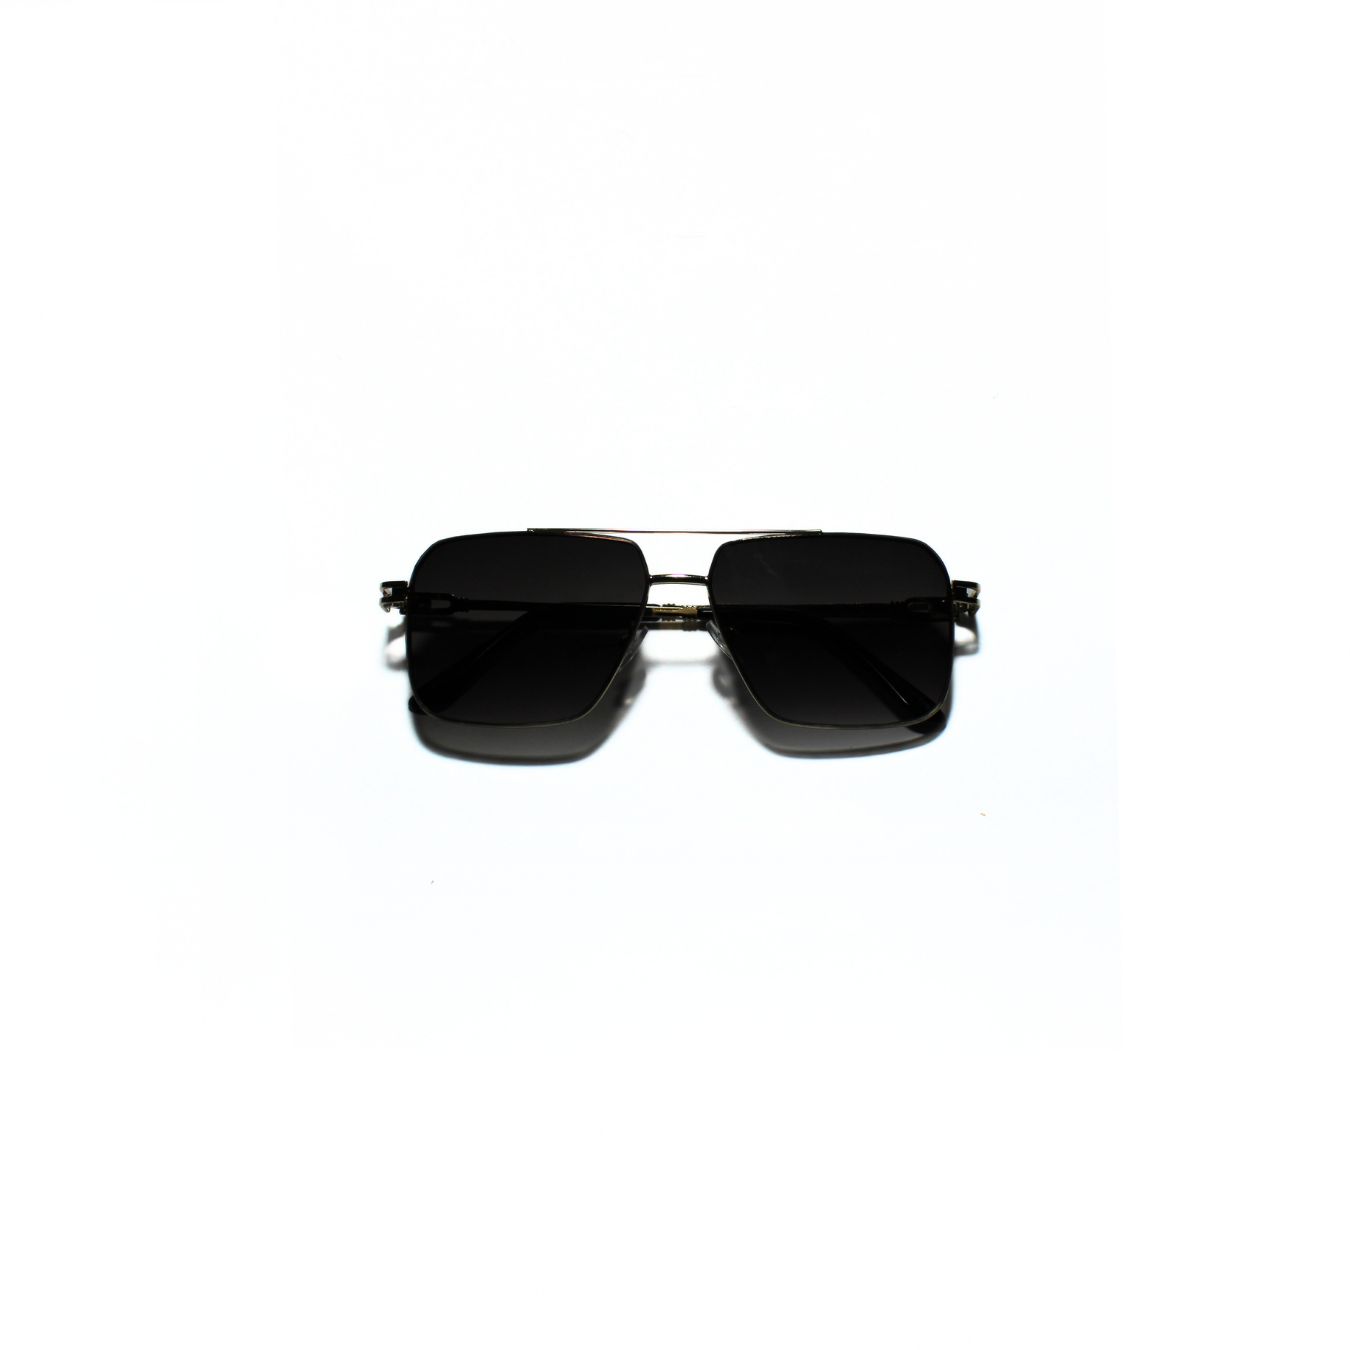 ARTHUR-II//005 I Sunglasses for Women - Specsview